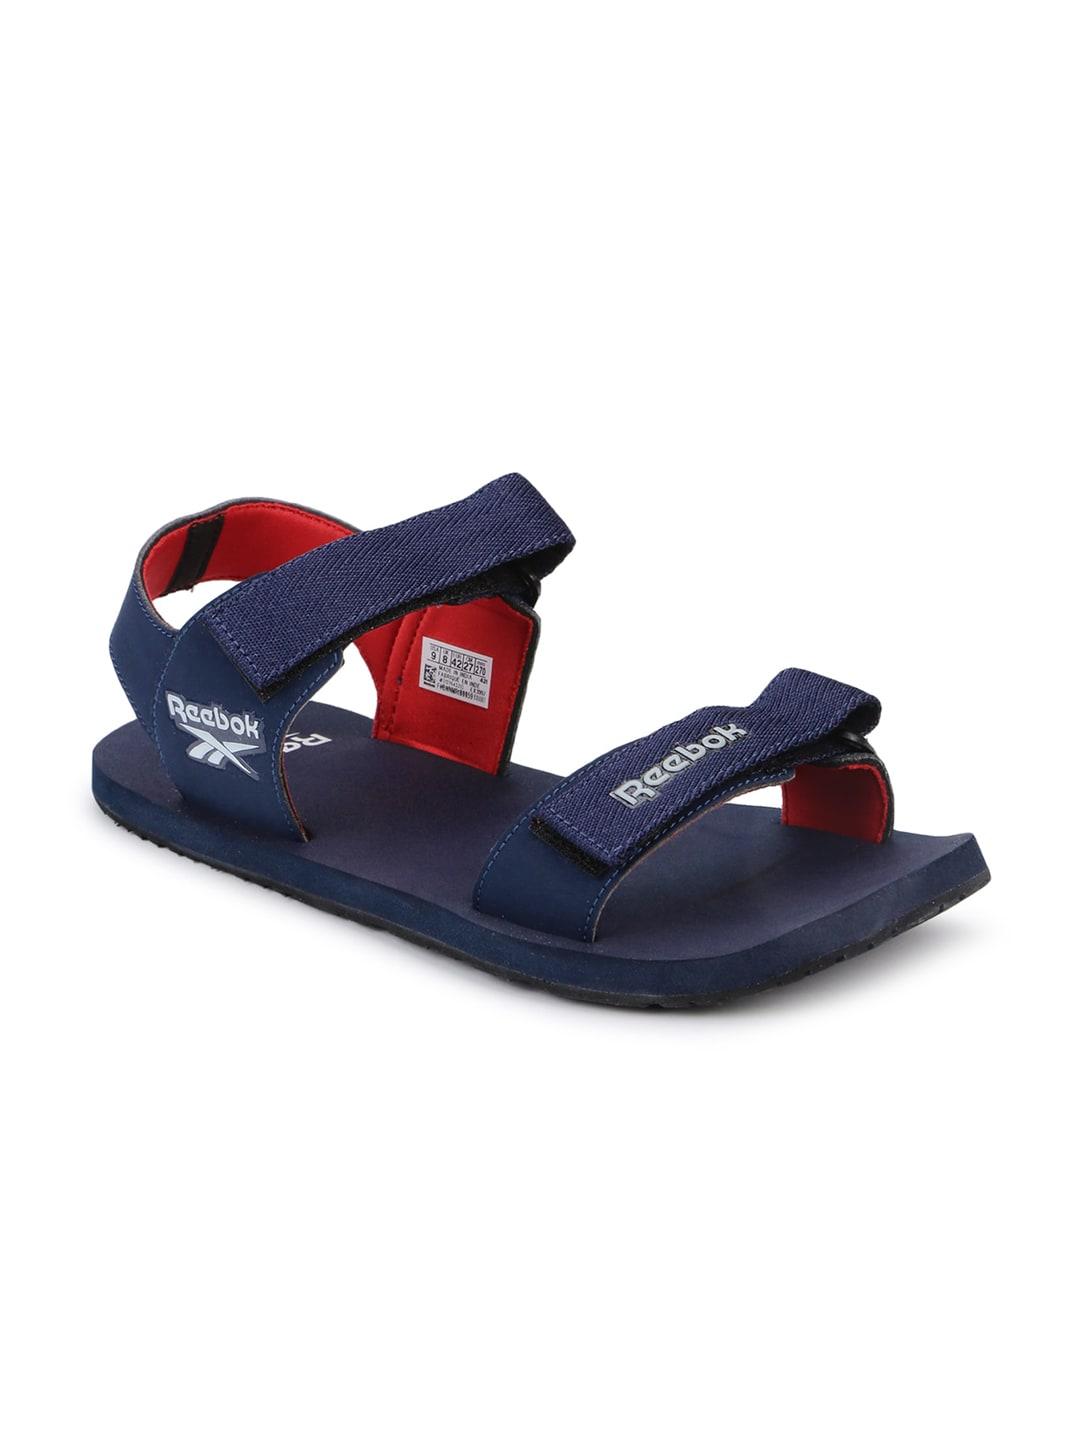 reebok-men-navy-blue-vm-max-sports-sandals